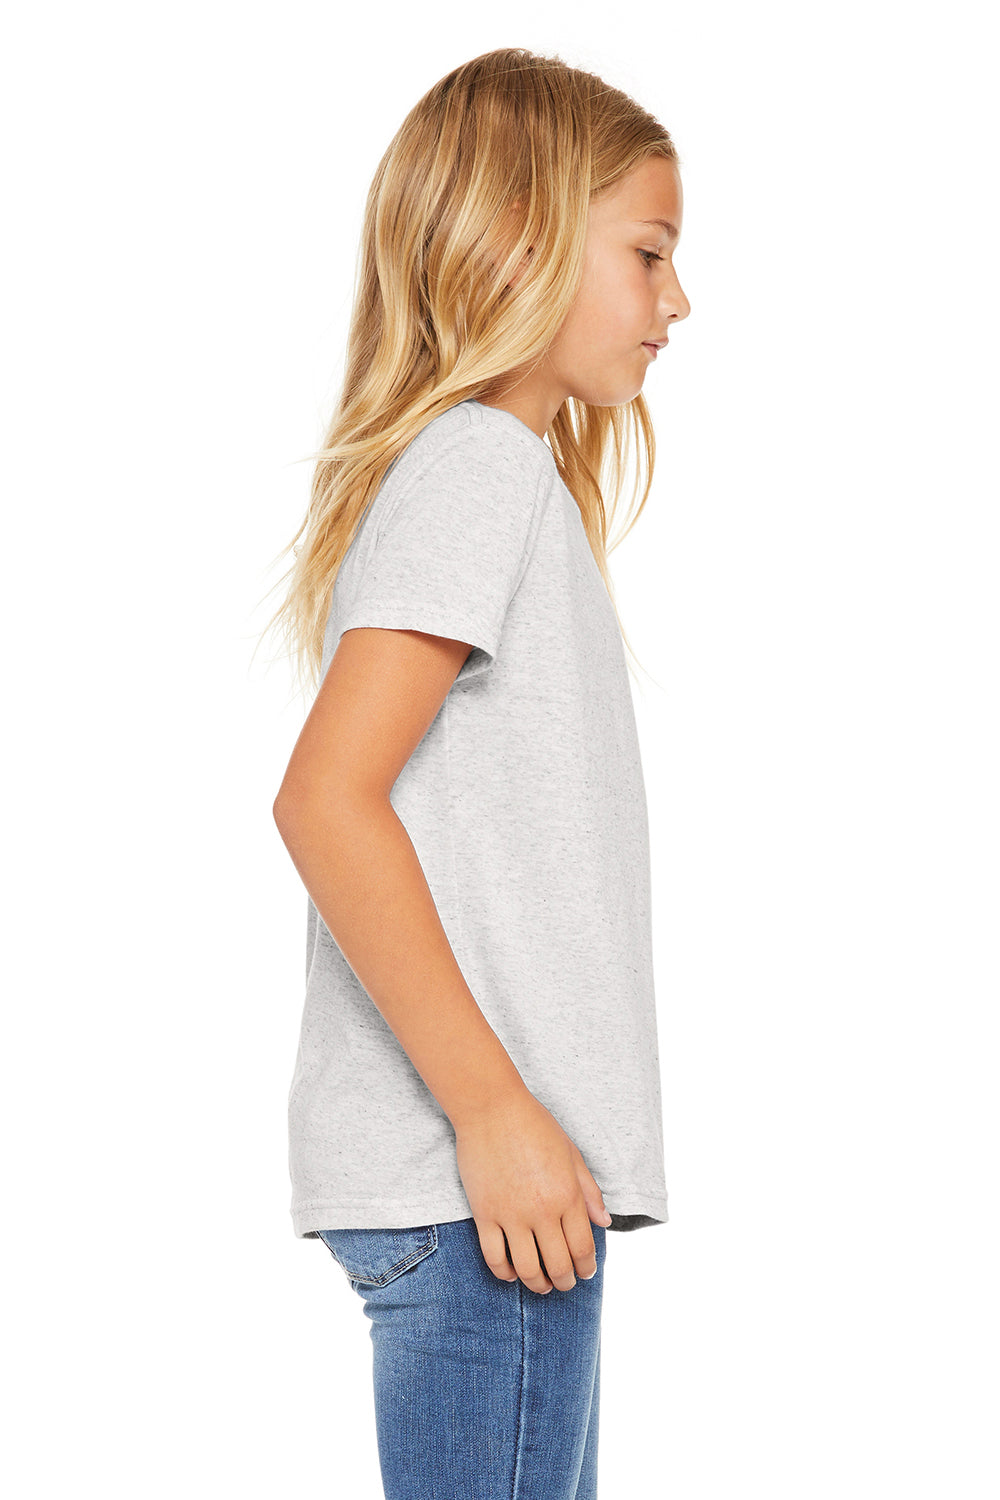 Bella + Canvas 3413Y Youth Short Sleeve Crewneck T-Shirt White Fleck Model Side